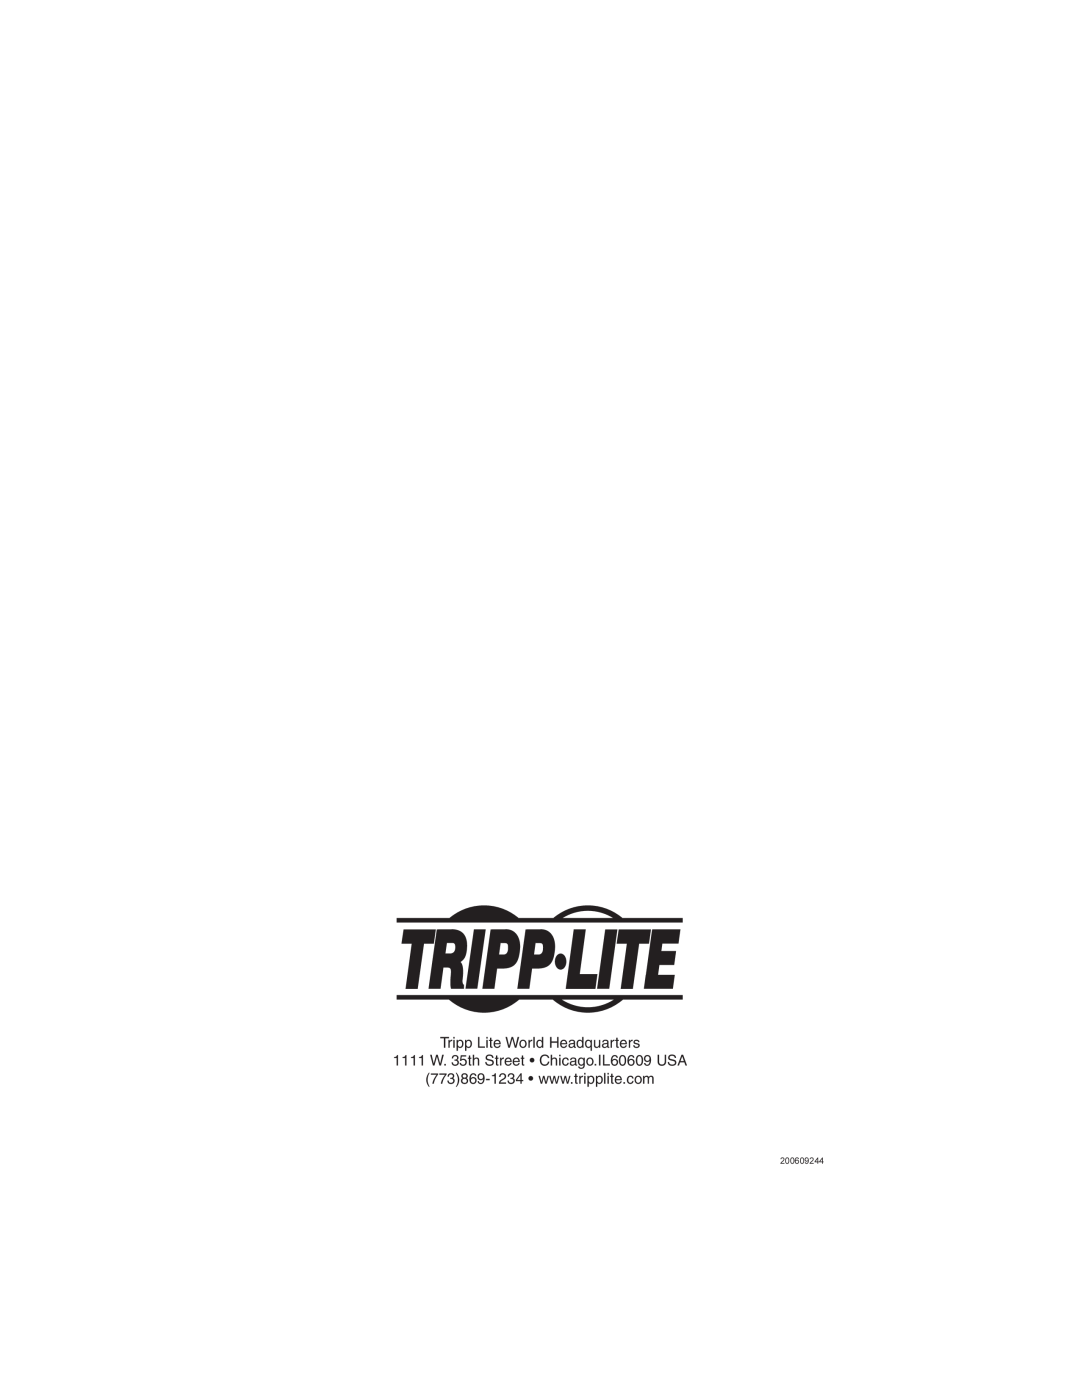 Tripp Lite IN3007KB specifications Tripp Lite World Headquarters, 1111 W. 35th Street Chicago.IL60609 USA, 200609244 